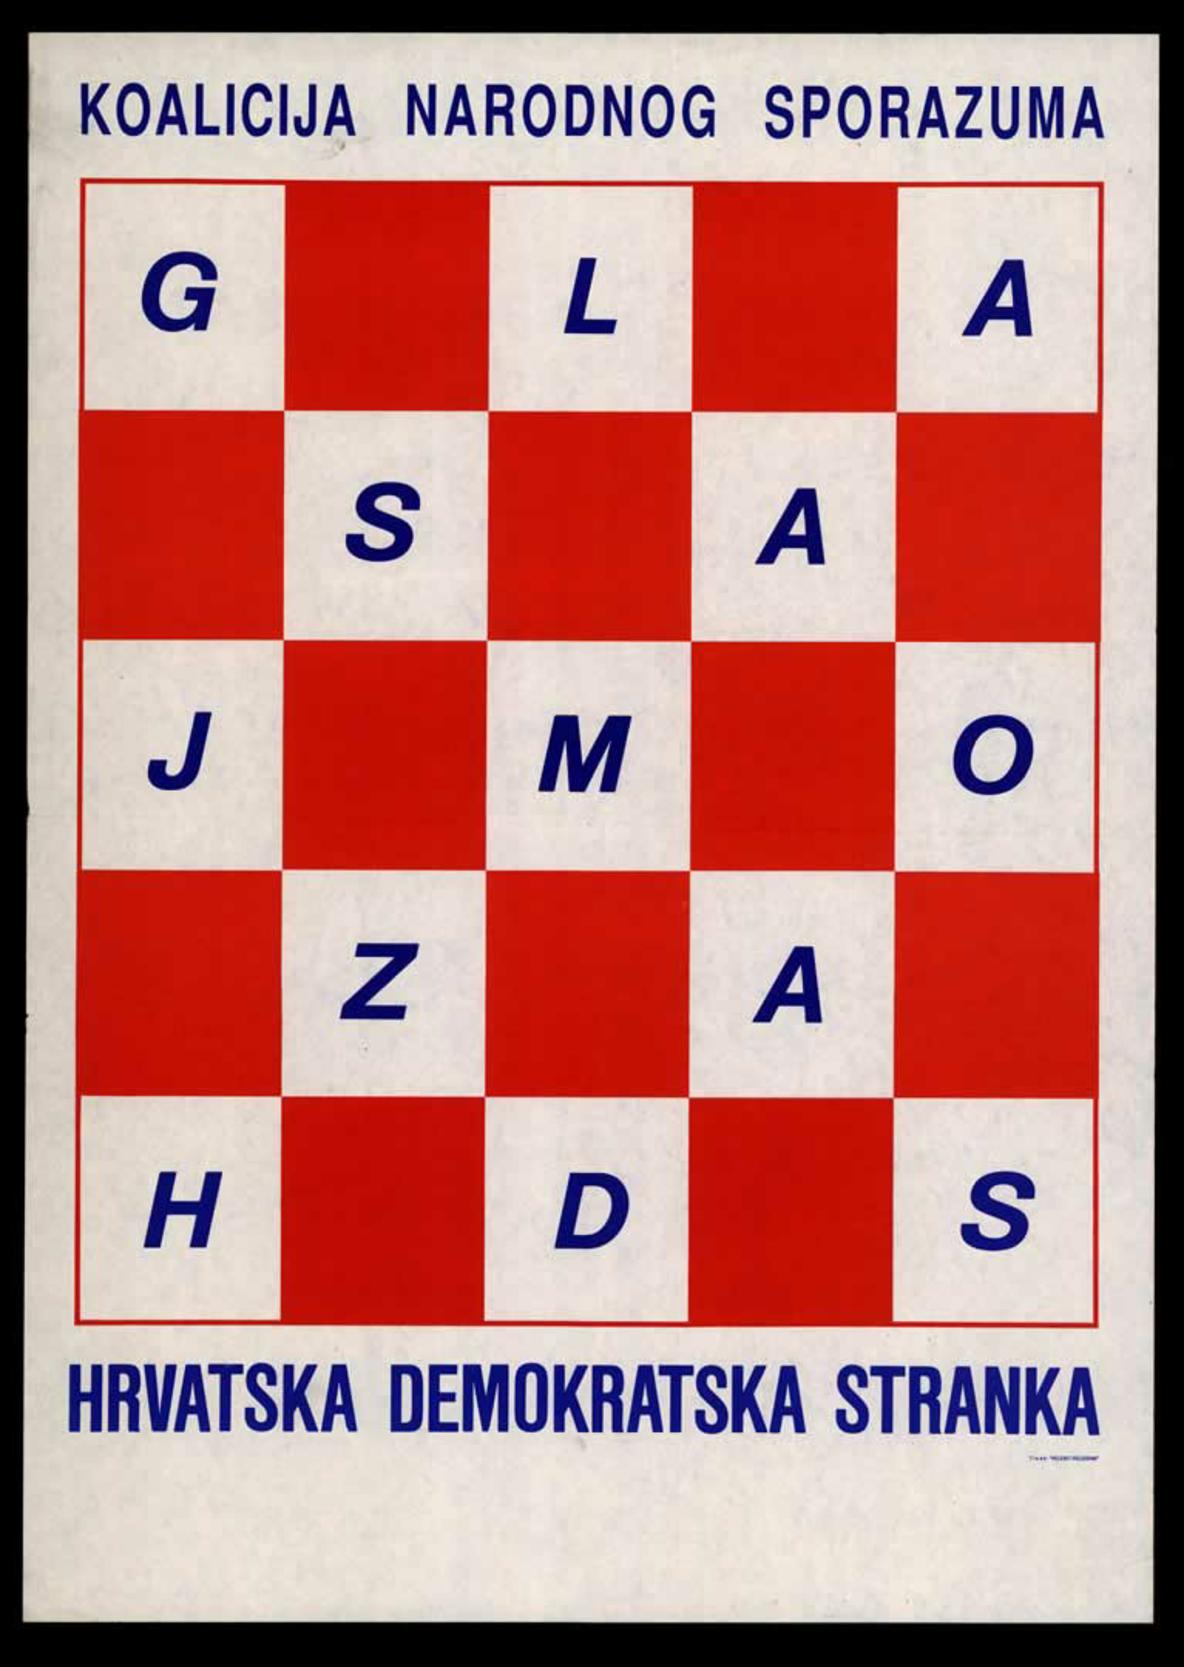 <strong>Izborni plakat Koalicije narodnog sporazuma,</strong> 1990.
<br><br>
HR-HDA-907. Zbirka stampata, 2.91
